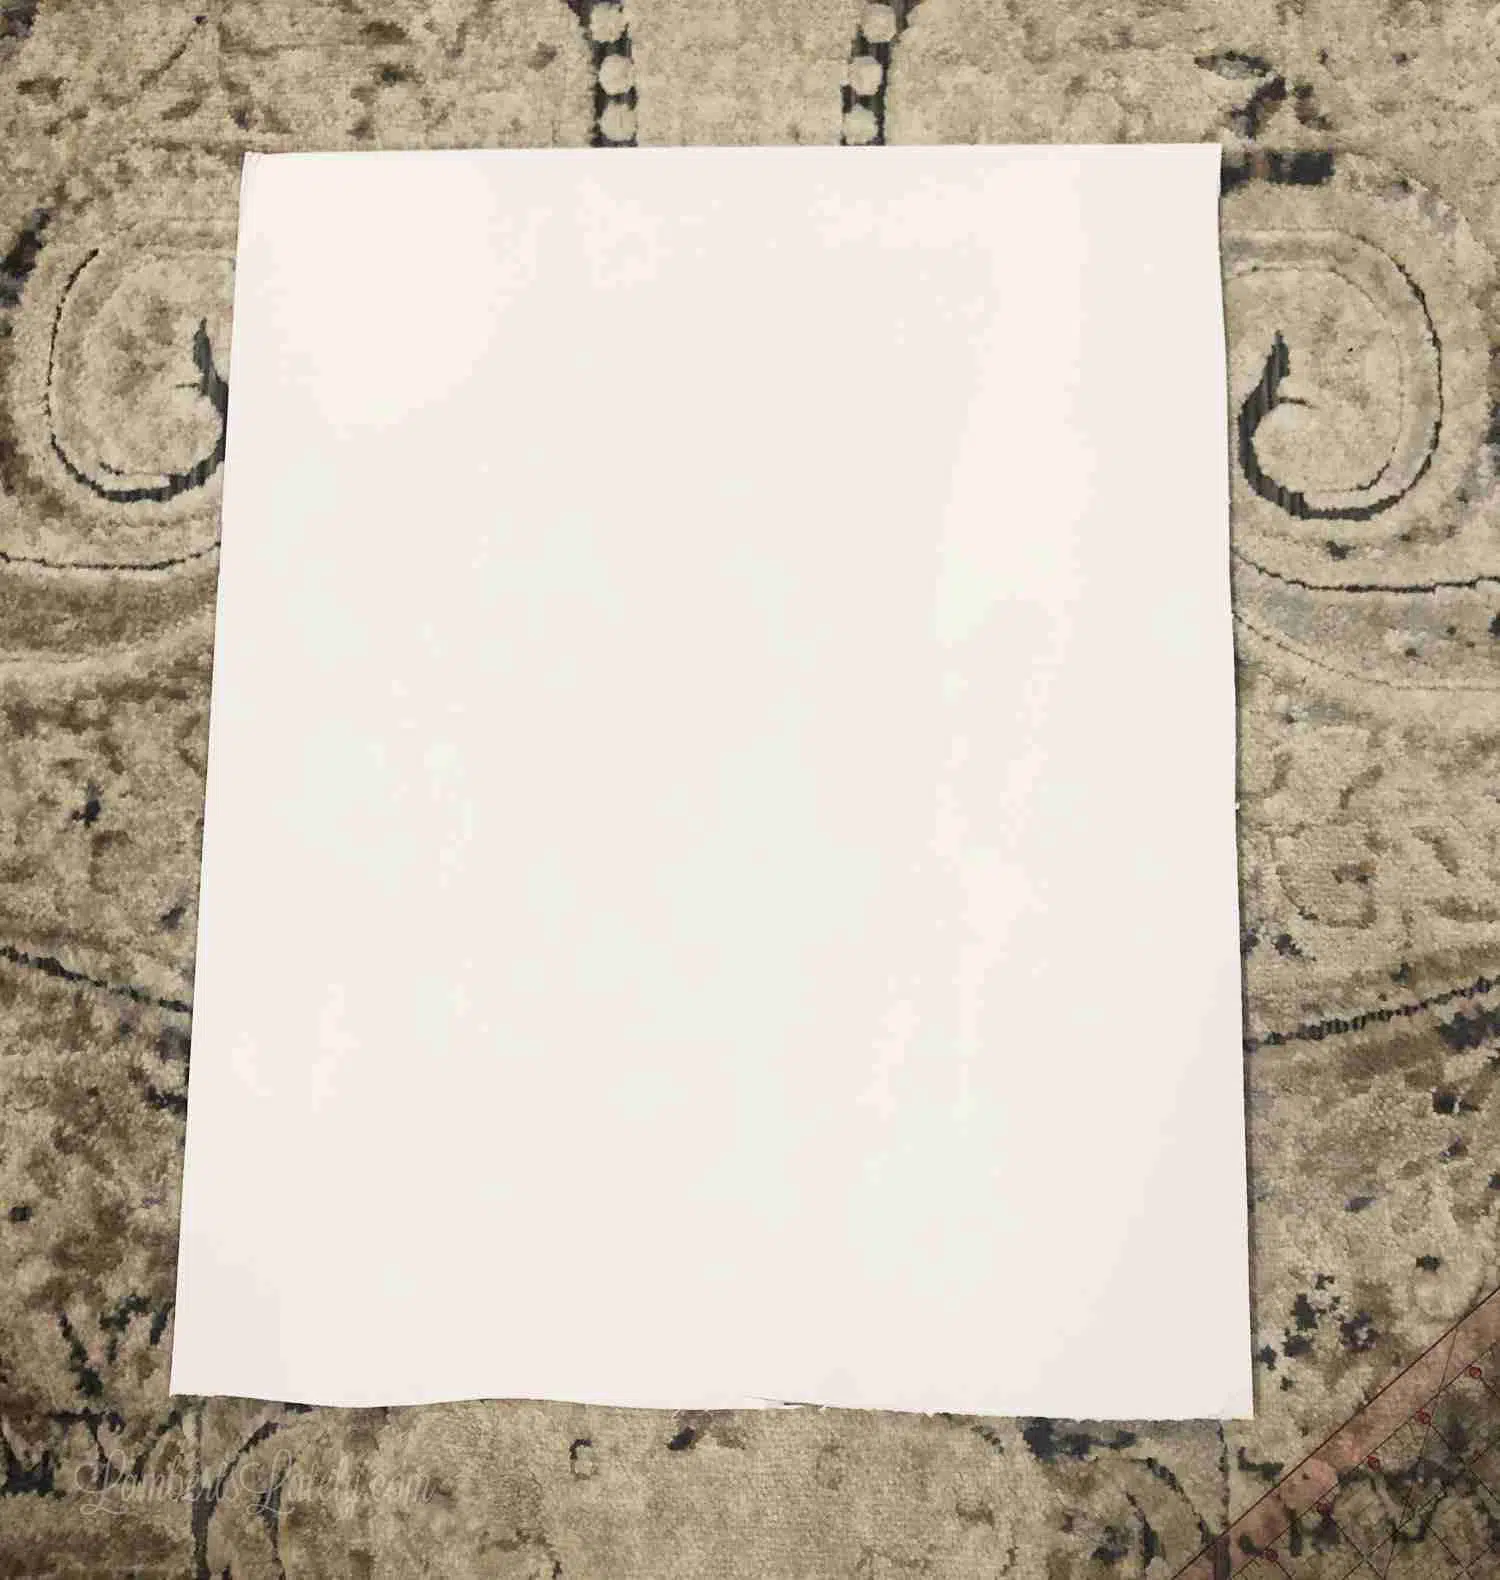 rectangular piece of cloth on a floor.